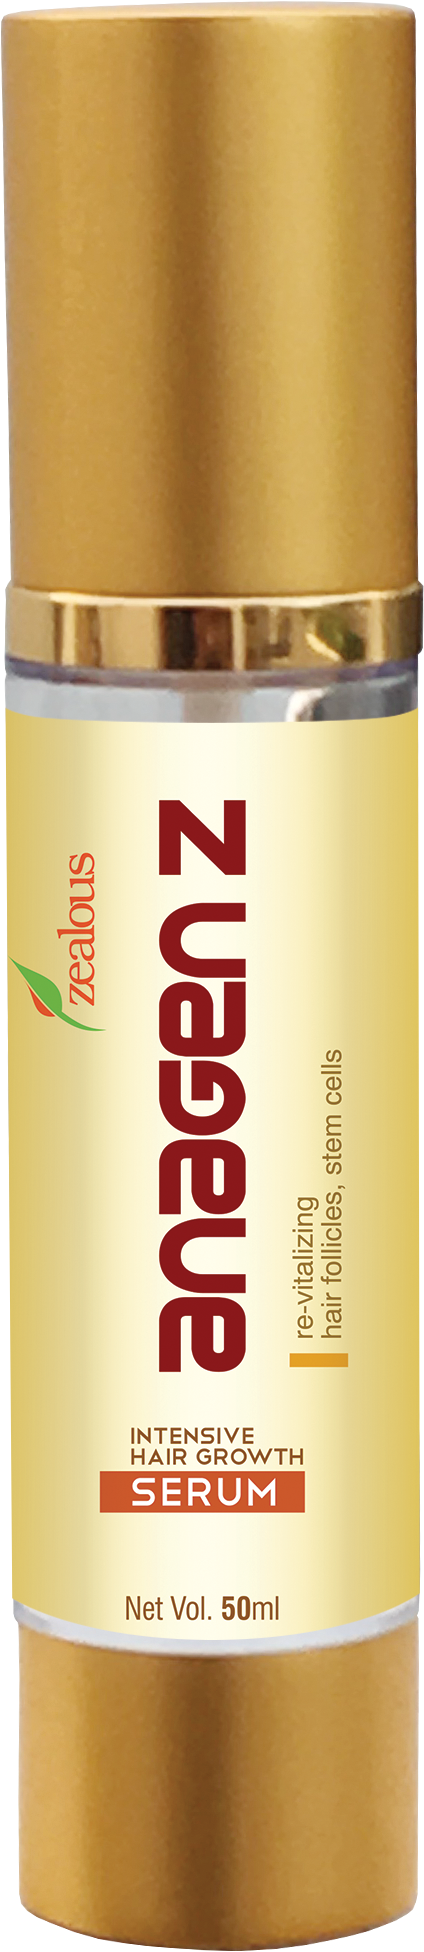 ANAGEN Z, Anti-hair loss serum, prolong growth of hair follicle, 50ml hair  serum – Buy Herbal Products & Herbal Medicines Online in India